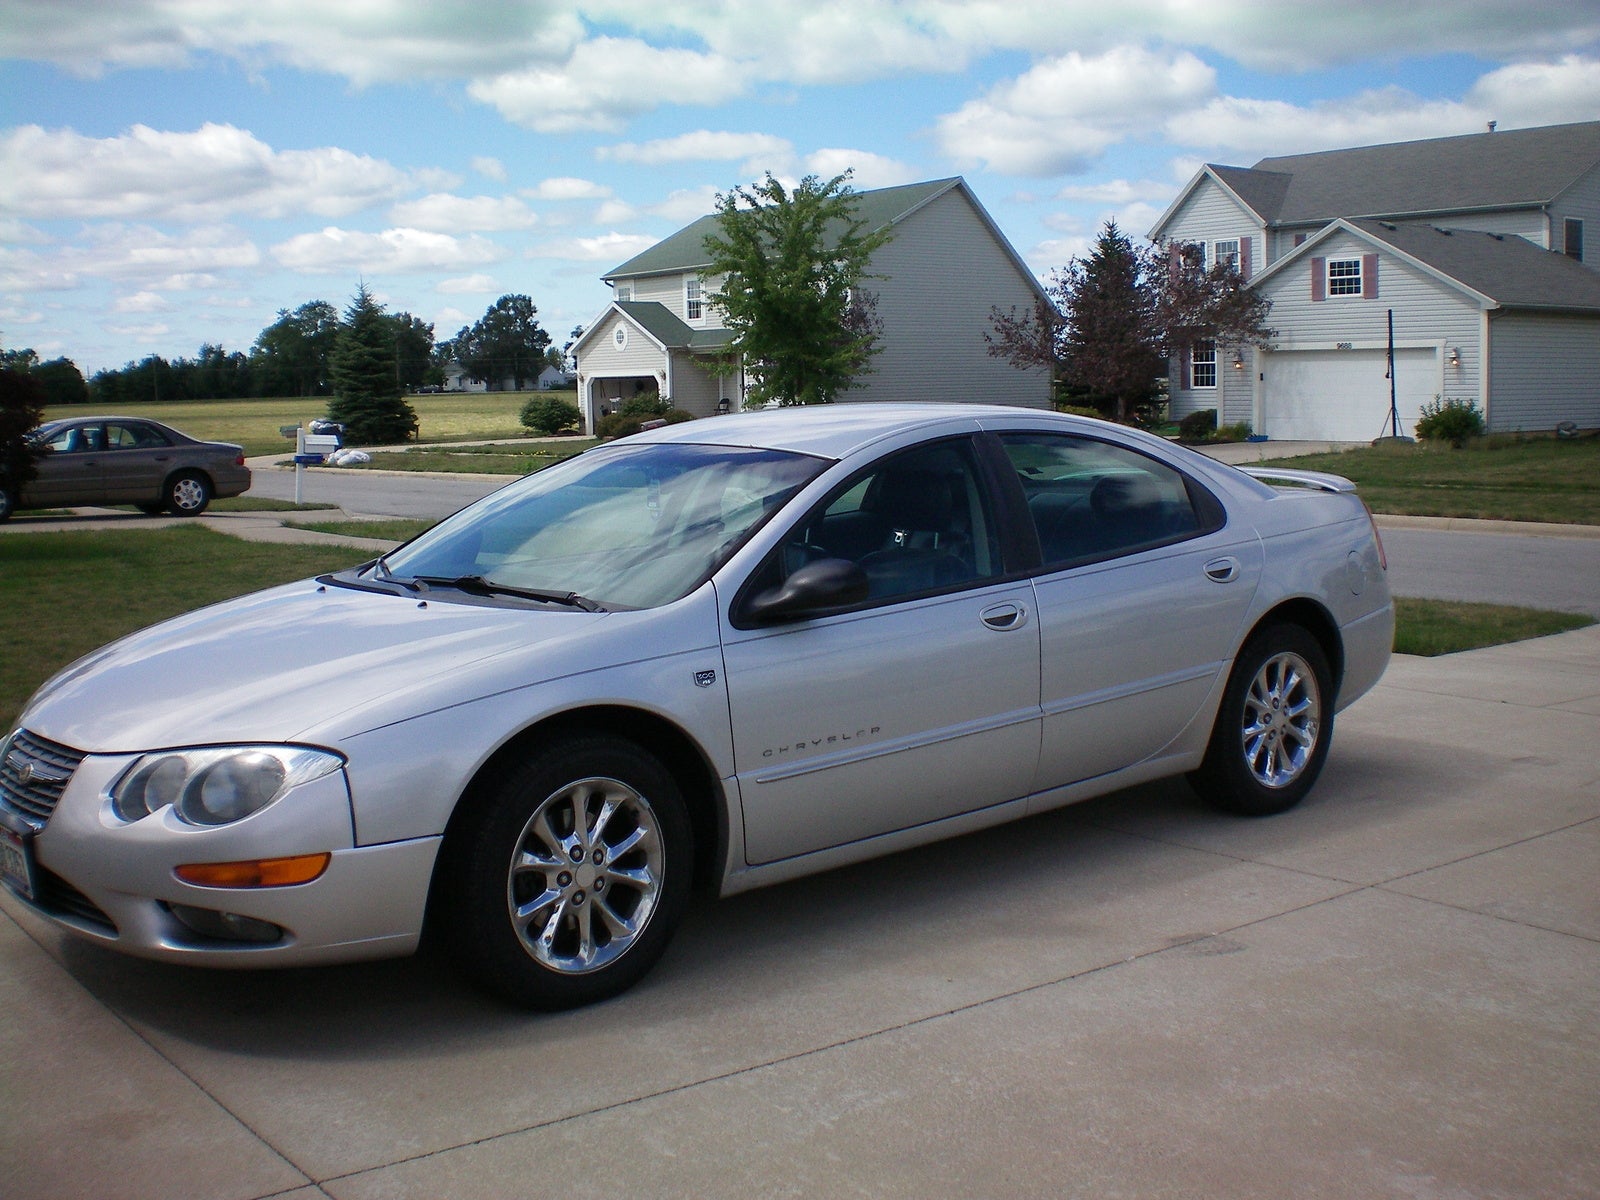 Chrysler 300m 2000 review